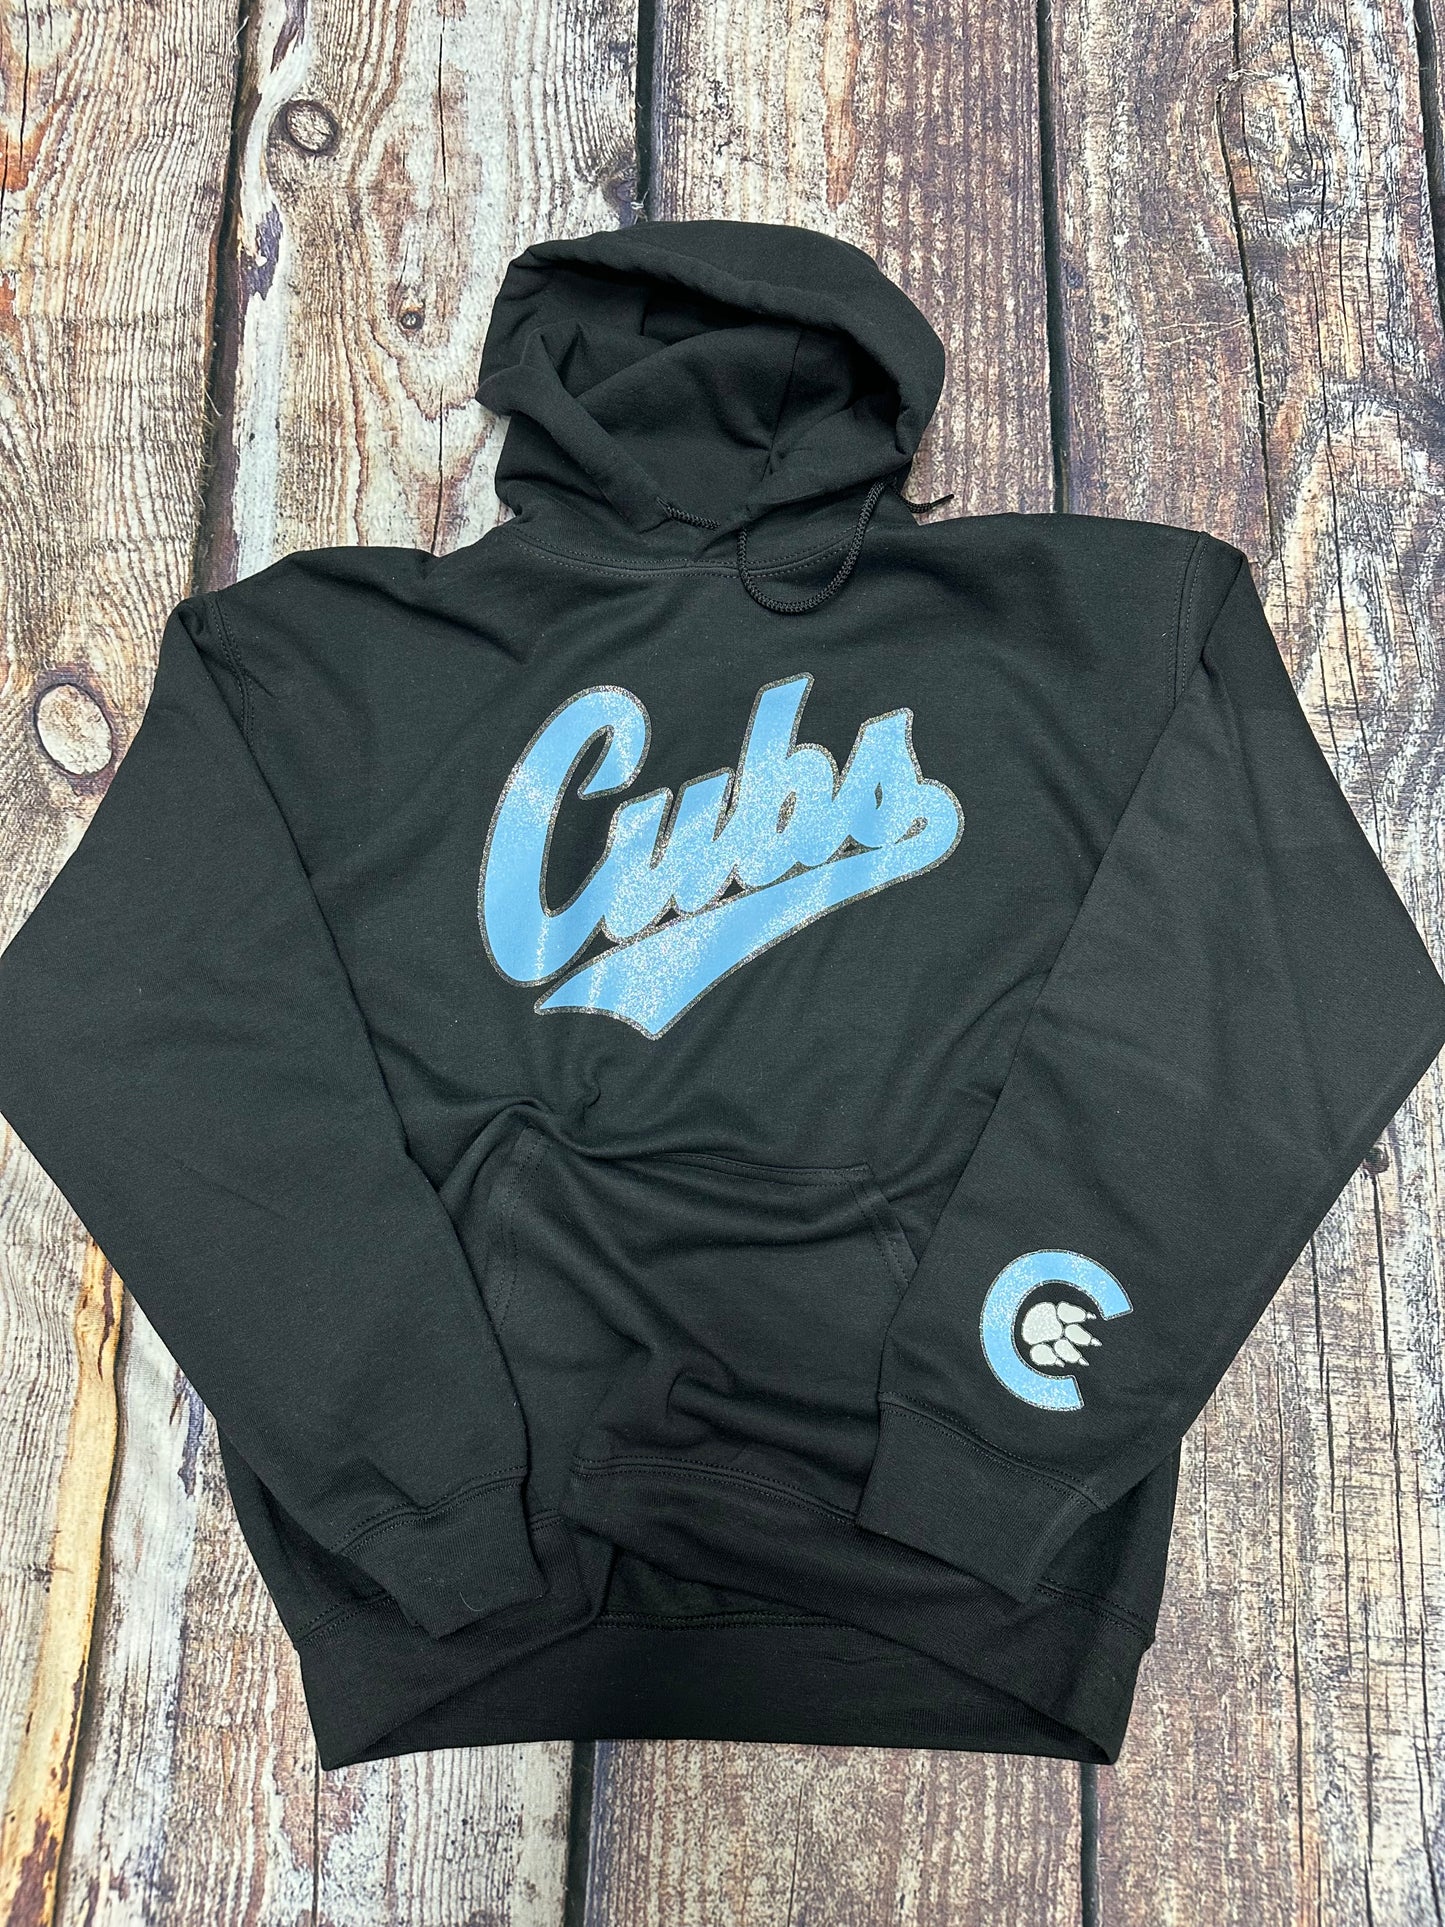 Cubs Personalized Hoodie (black)